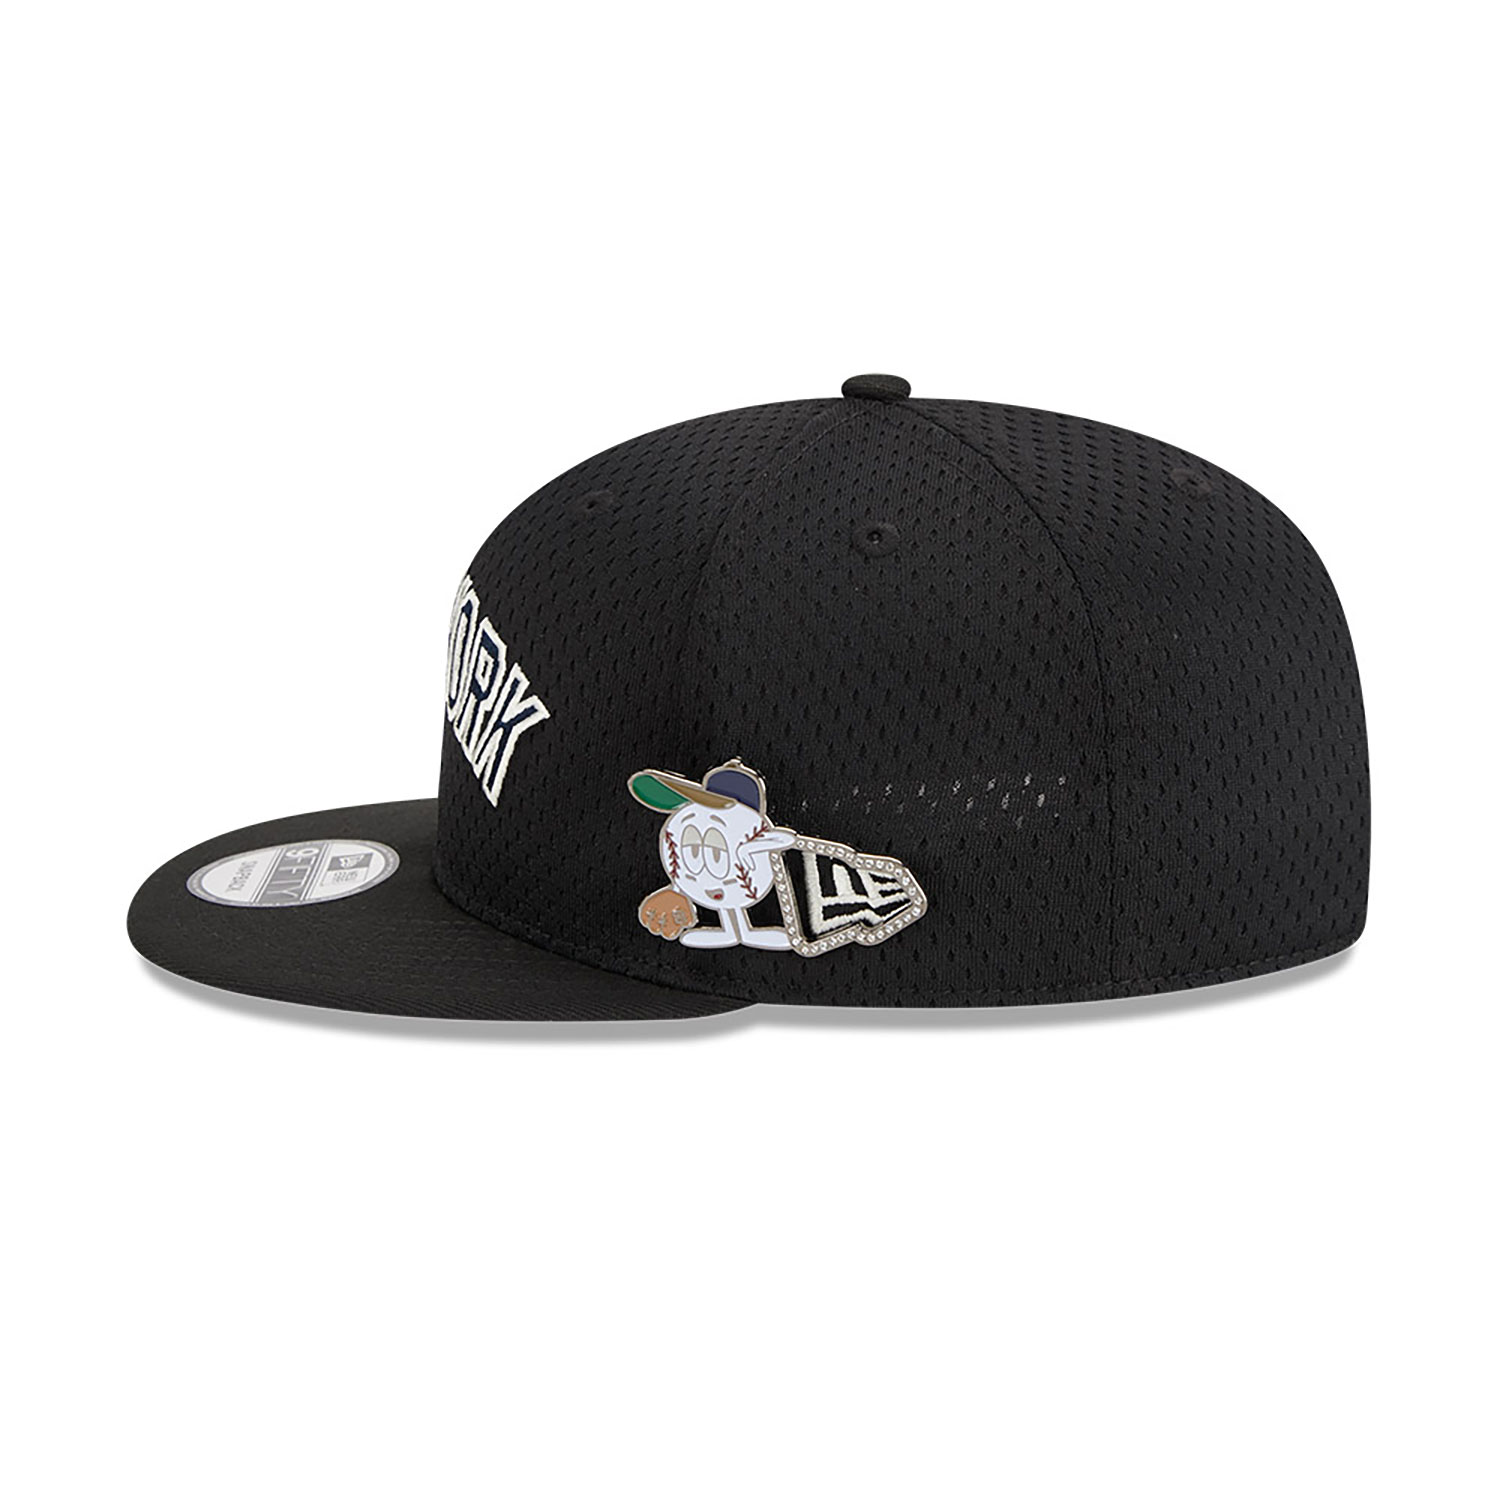 New York Yankees Post-Up Pin Black 9FIFTY Cap